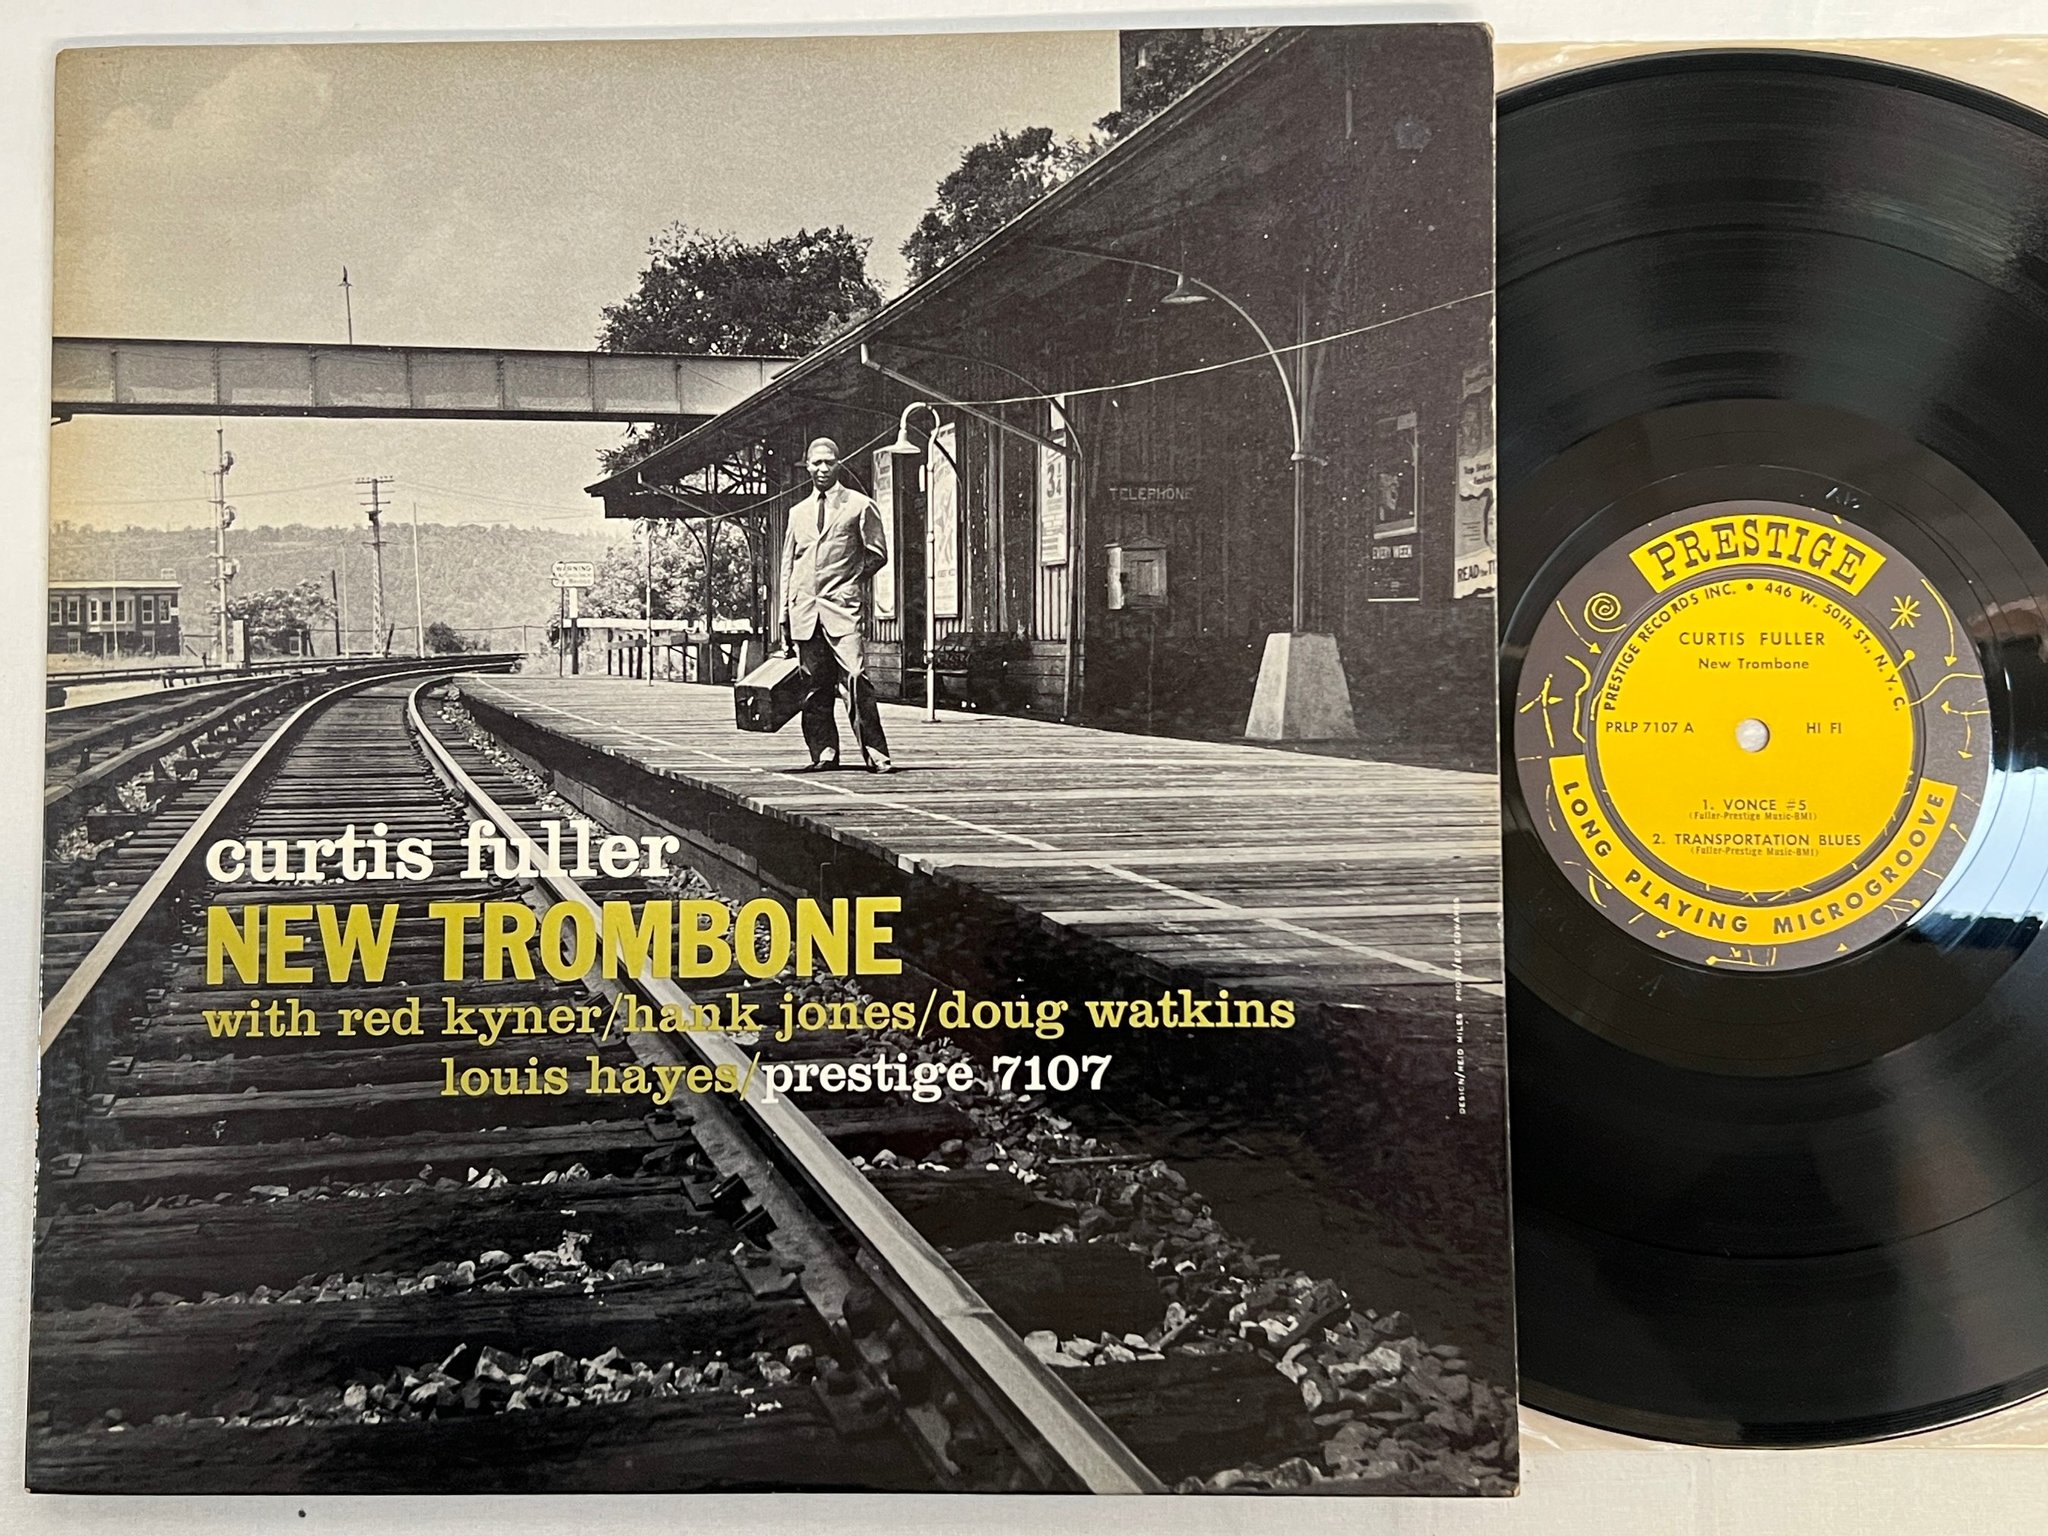 Omslagsbild för skivan CURTIS FULLER new trombone LP -57 US PRESTIGE PRLP 7107 orig press ** RARE **